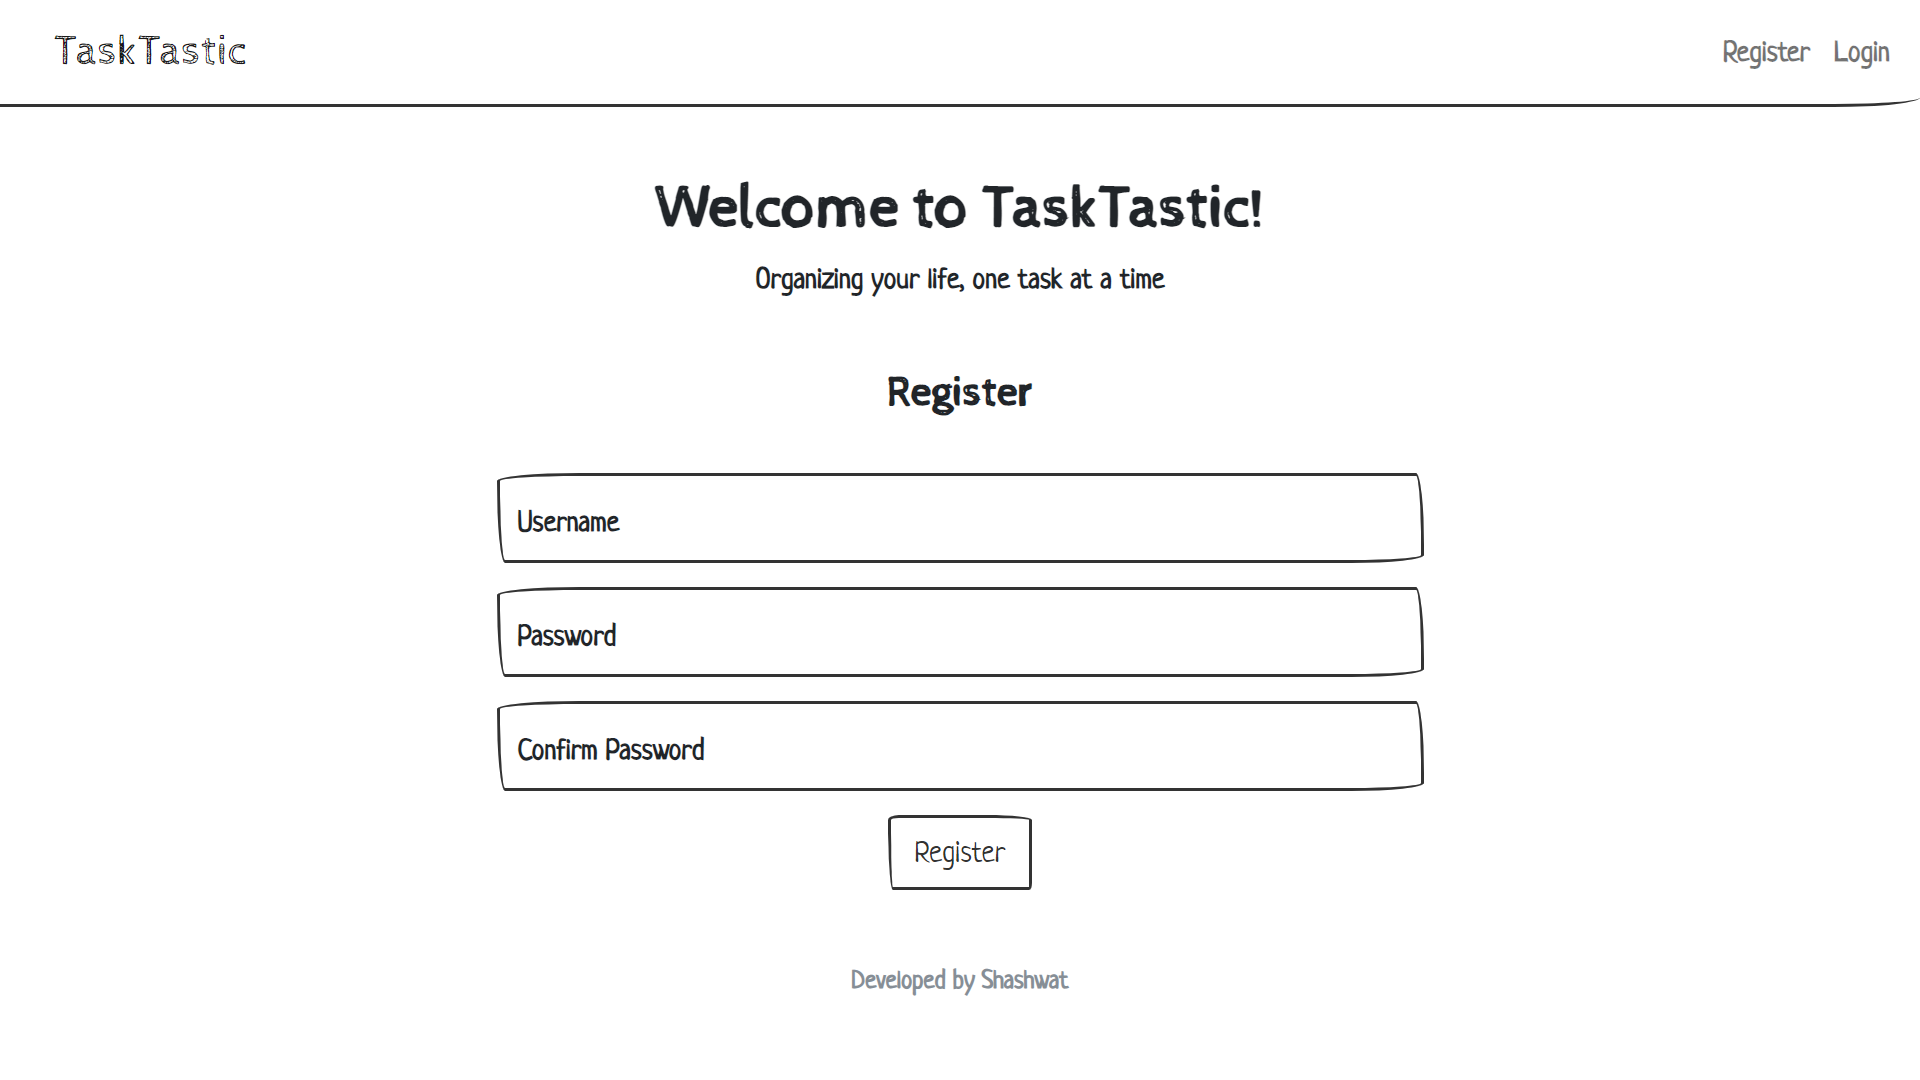 TaskTastic registration page